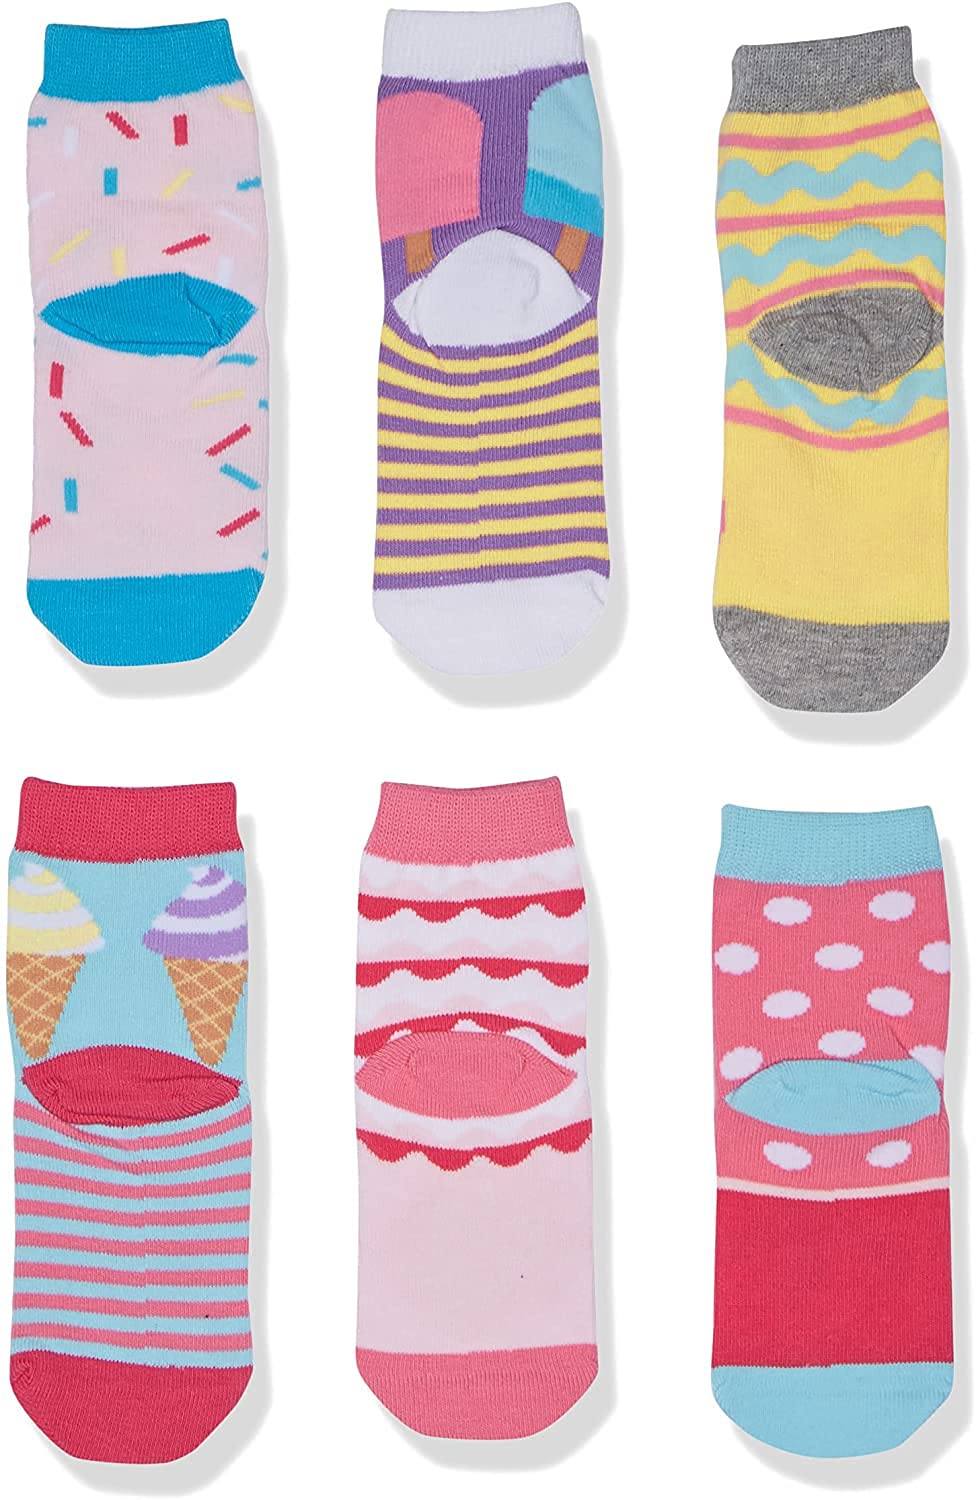 Jefferies Socks Girls' Sweat Treats Ice Cream/Donuts Fashion Crew Socks 6 Pair Pack